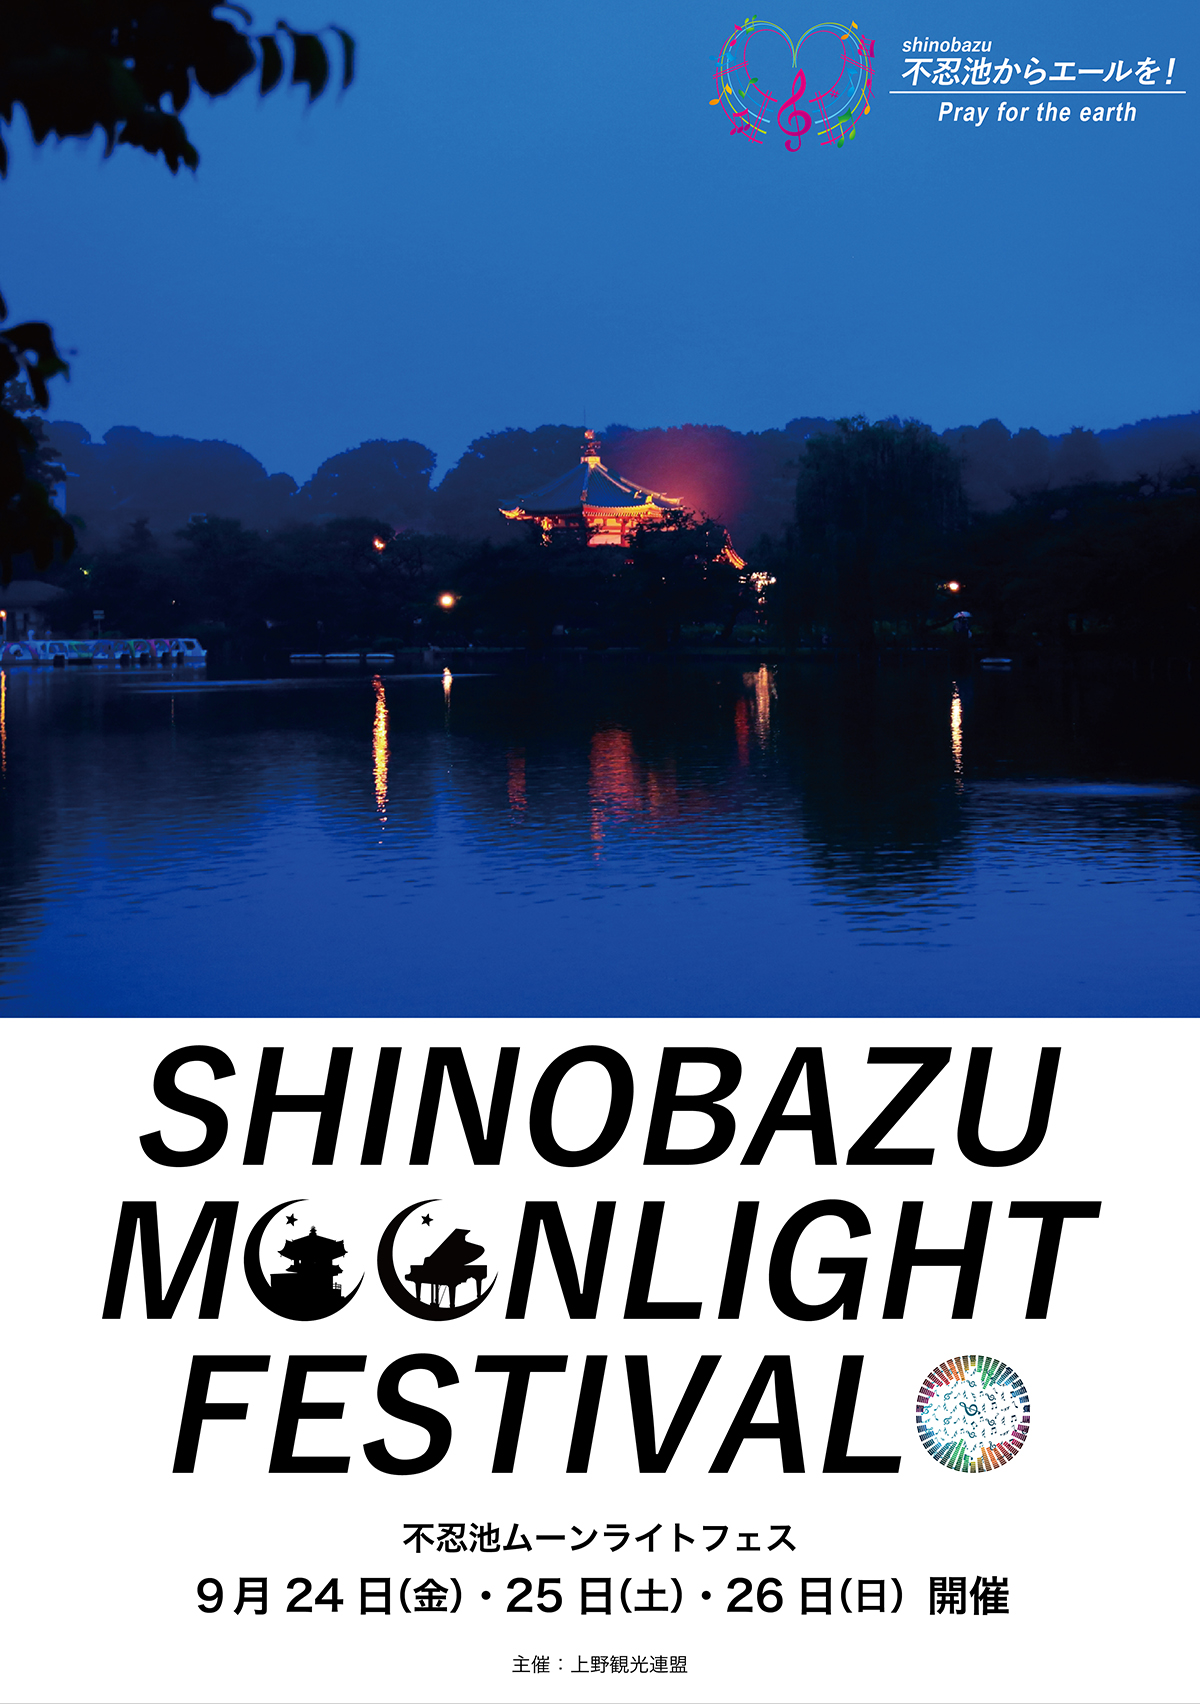 「SHINOBAZU moonlight fes」開催予定